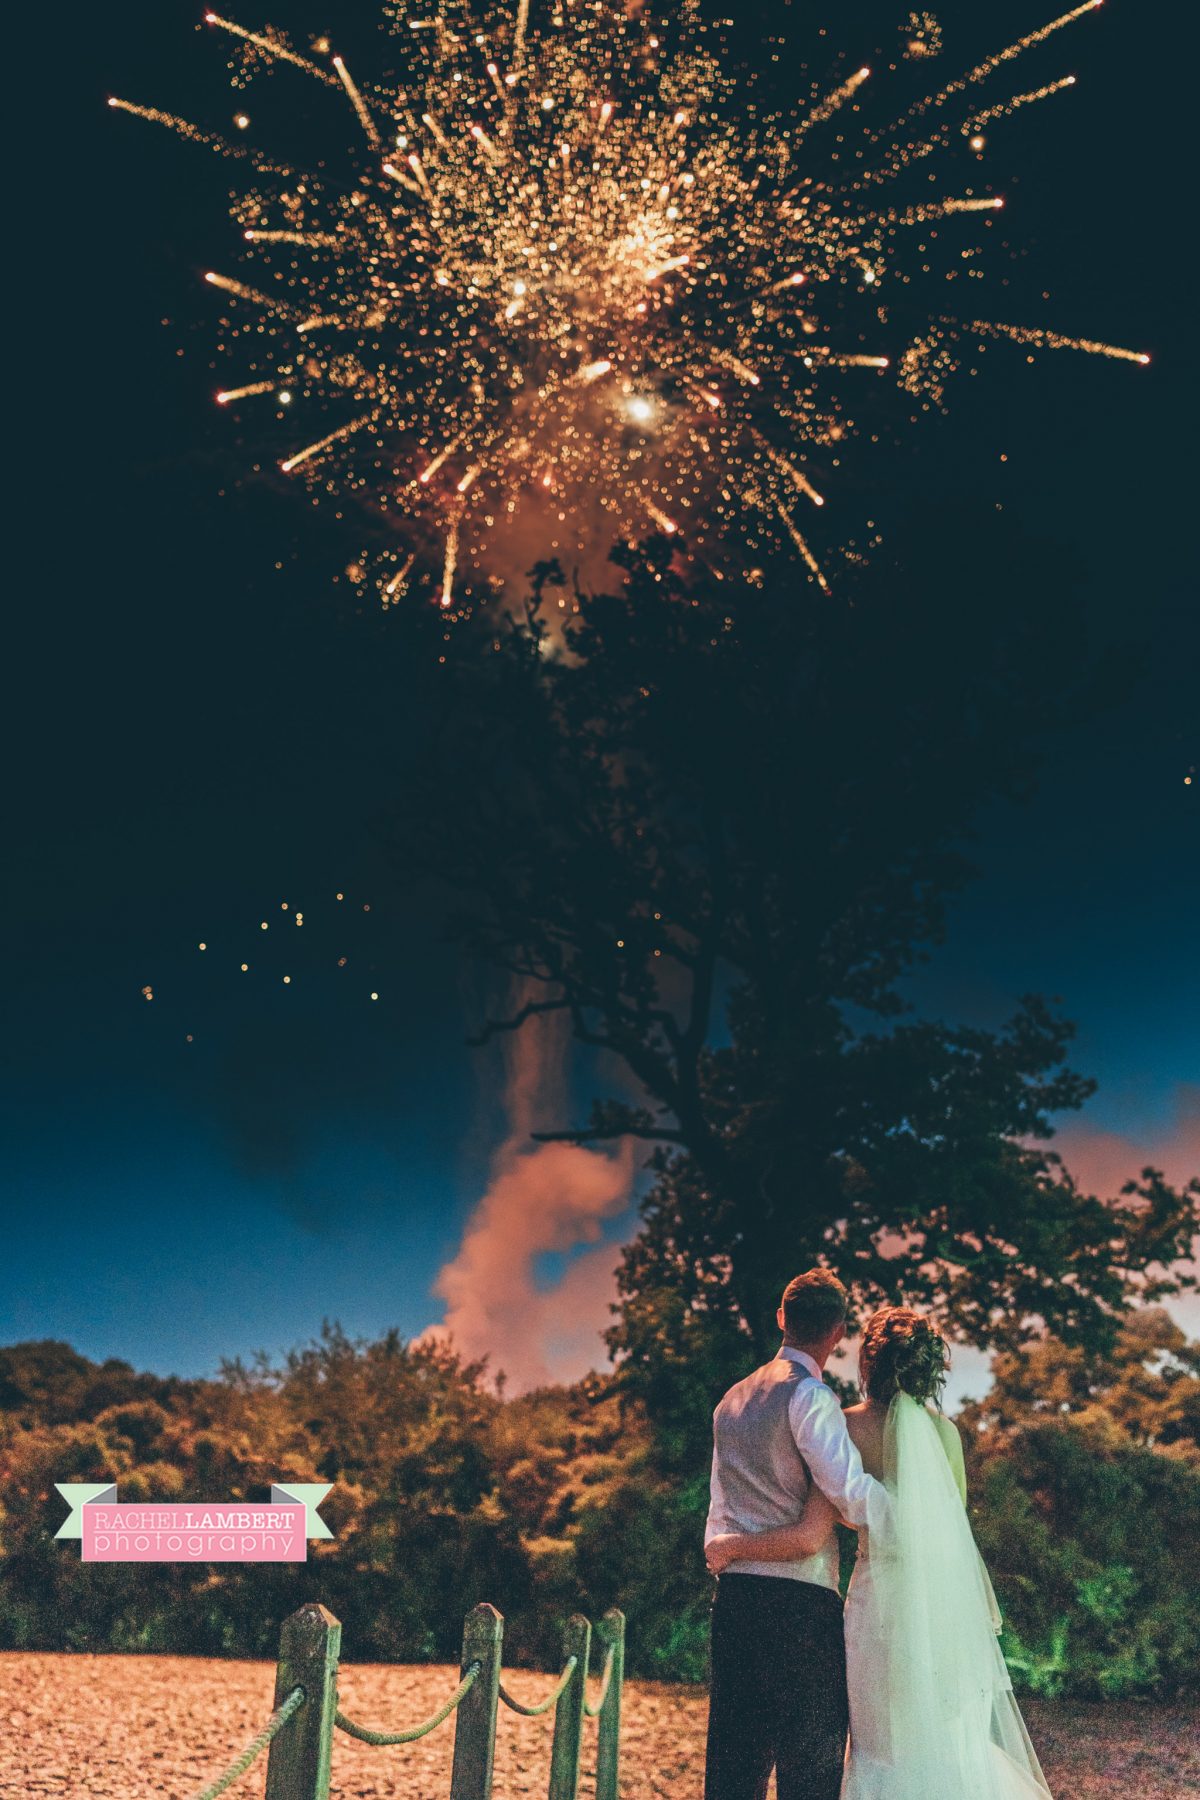 olwalls wedding photographer rachel lambert photography bride and groom fireworks